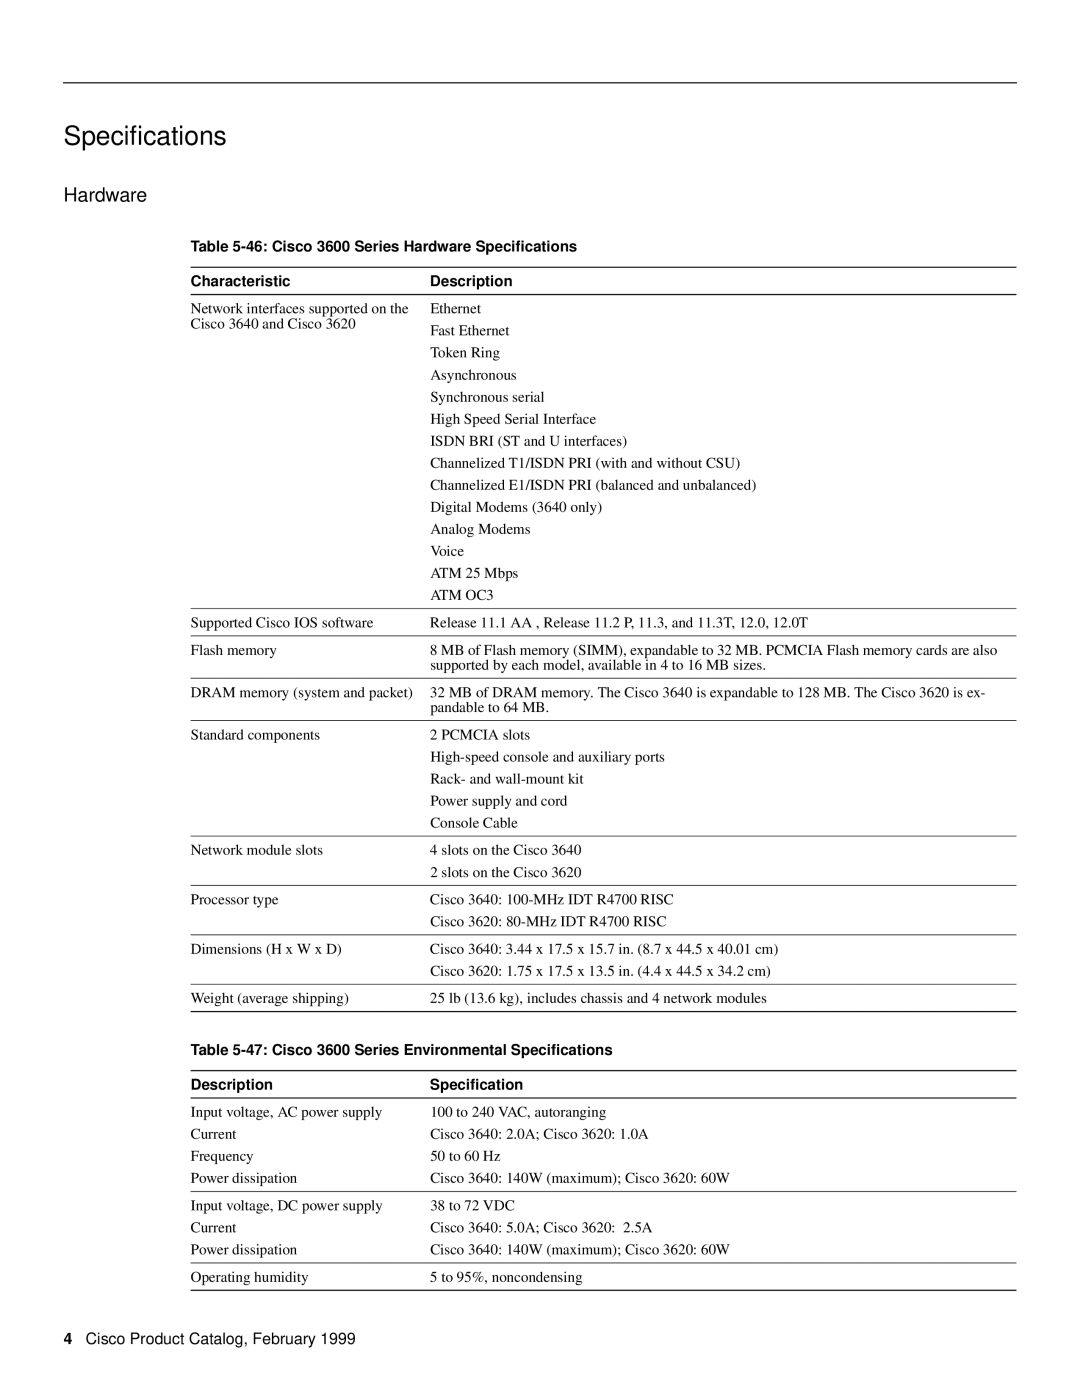 Cisco Systems manual Cisco Product Catalog, February, 46 Cisco 3600 Series Hardware Speciﬁcations, Description 